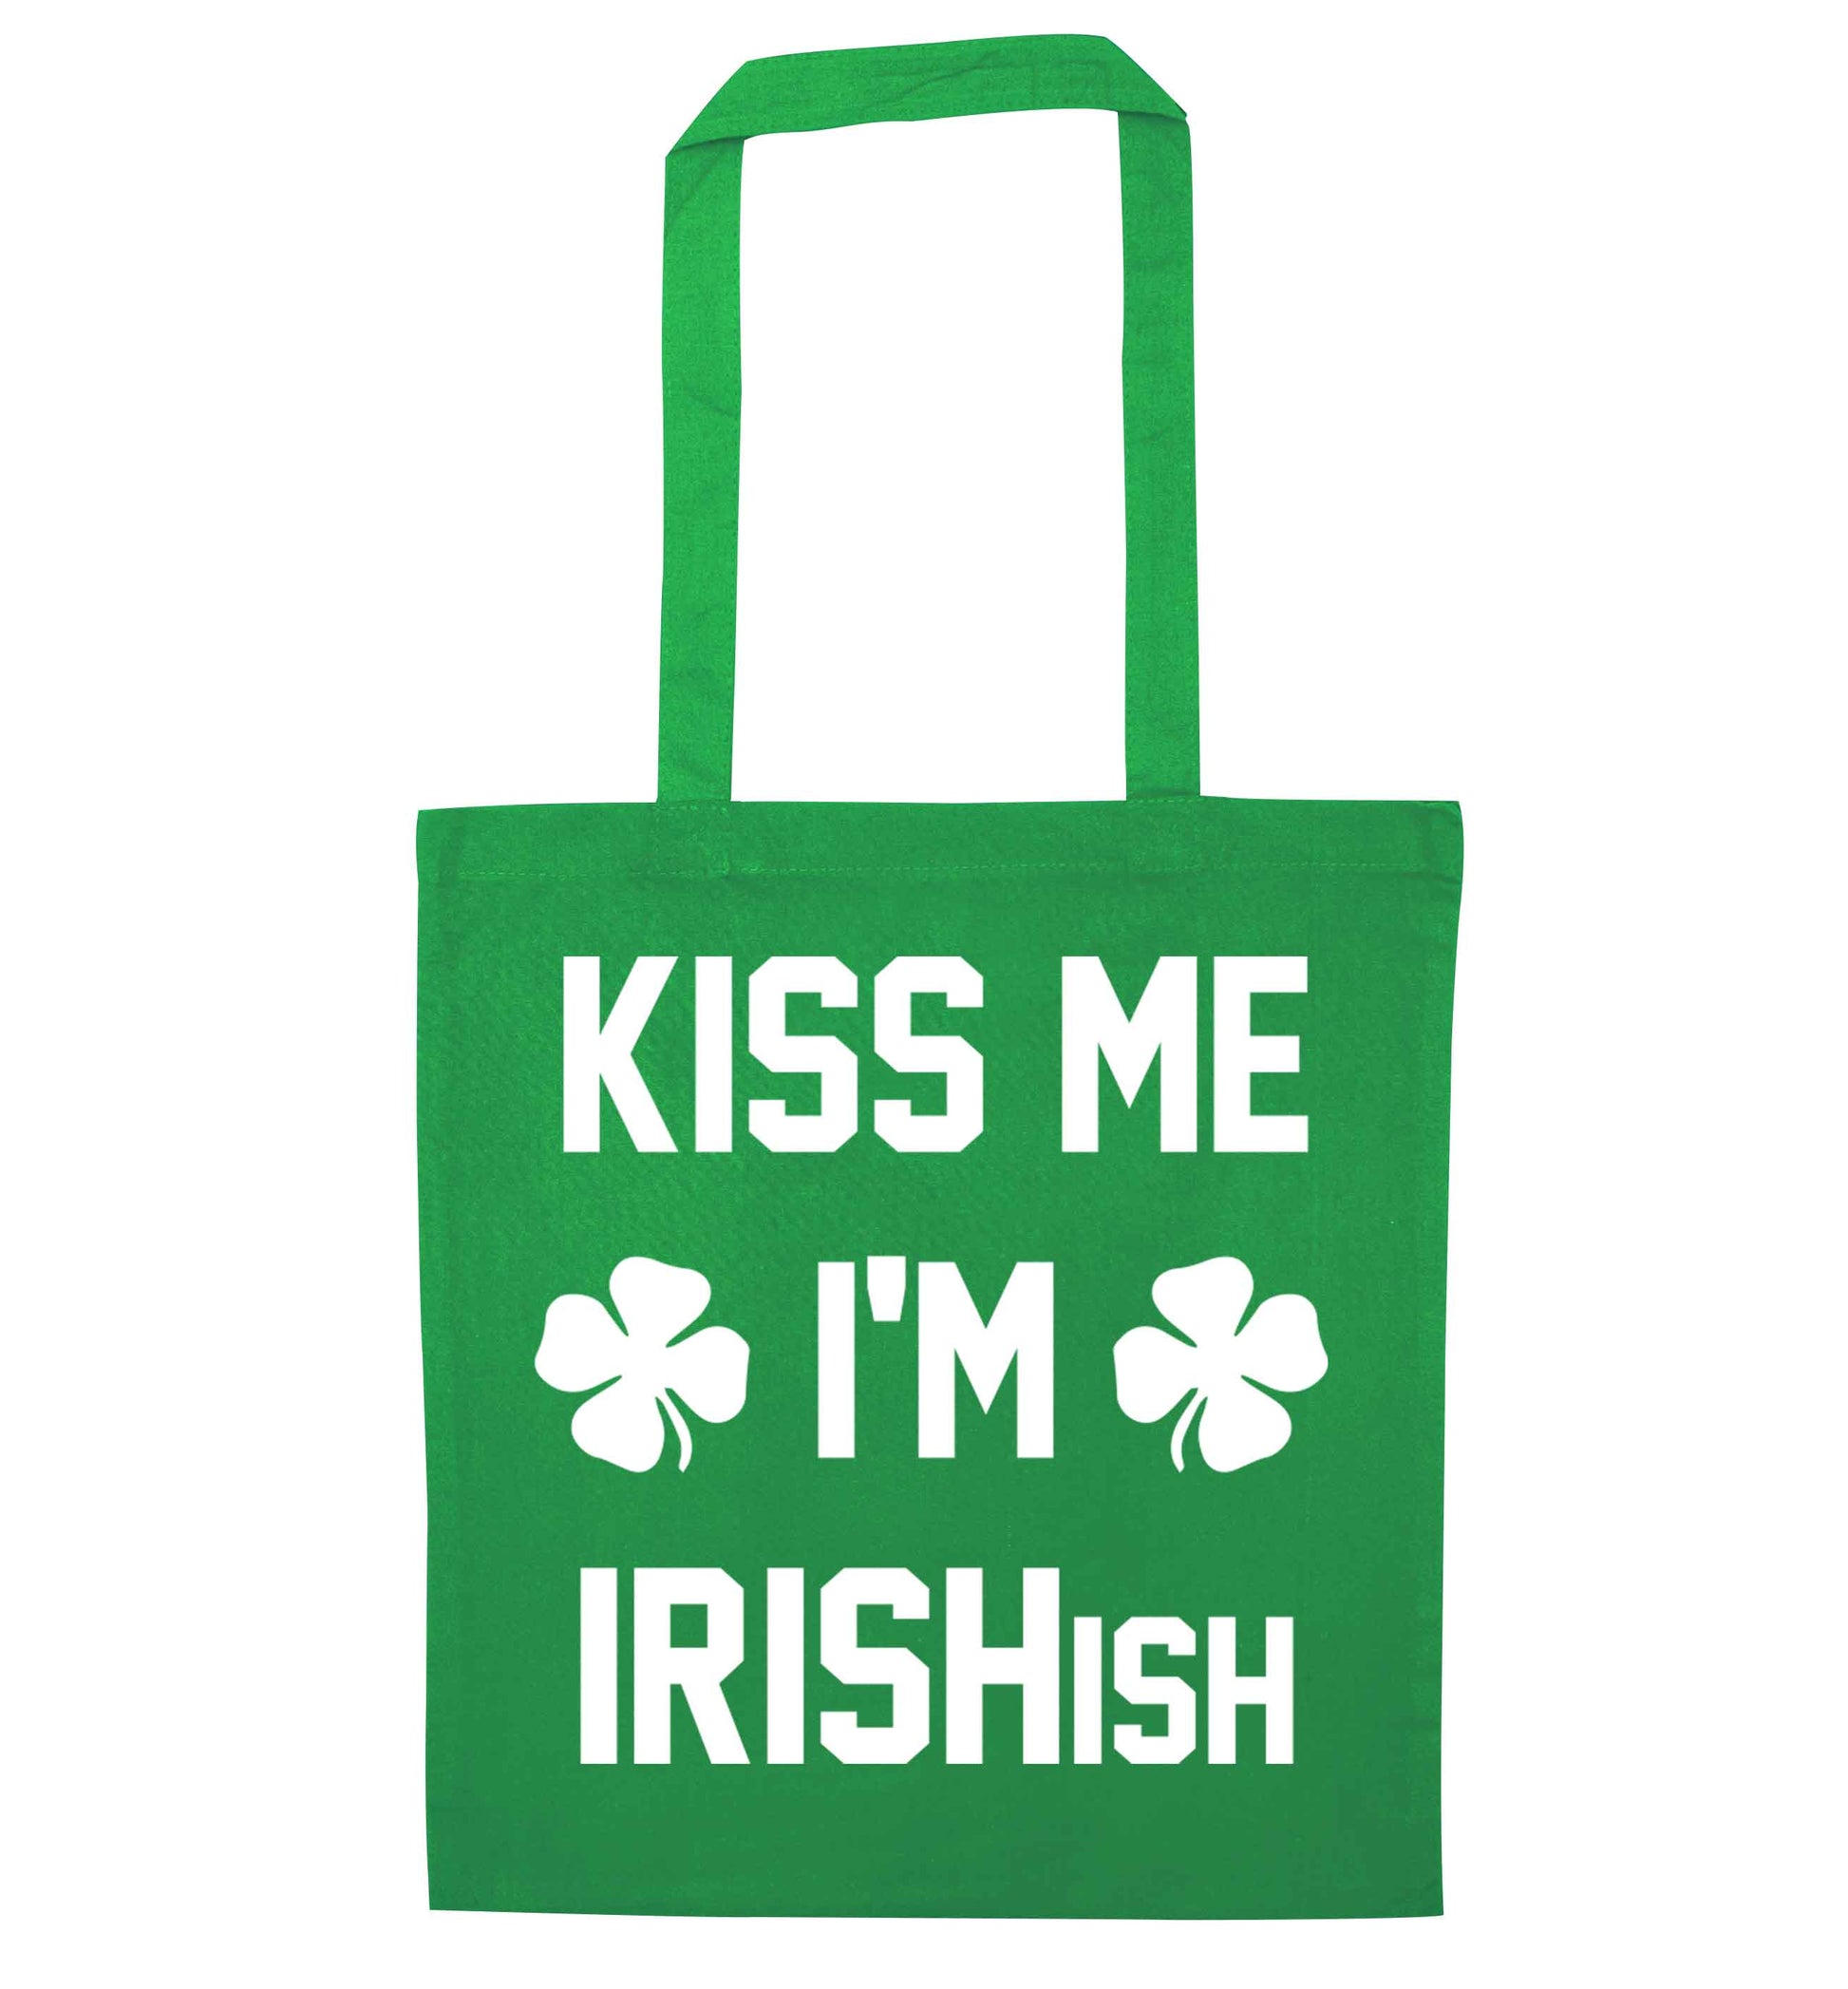 Kiss me I'm Irishish green tote bag